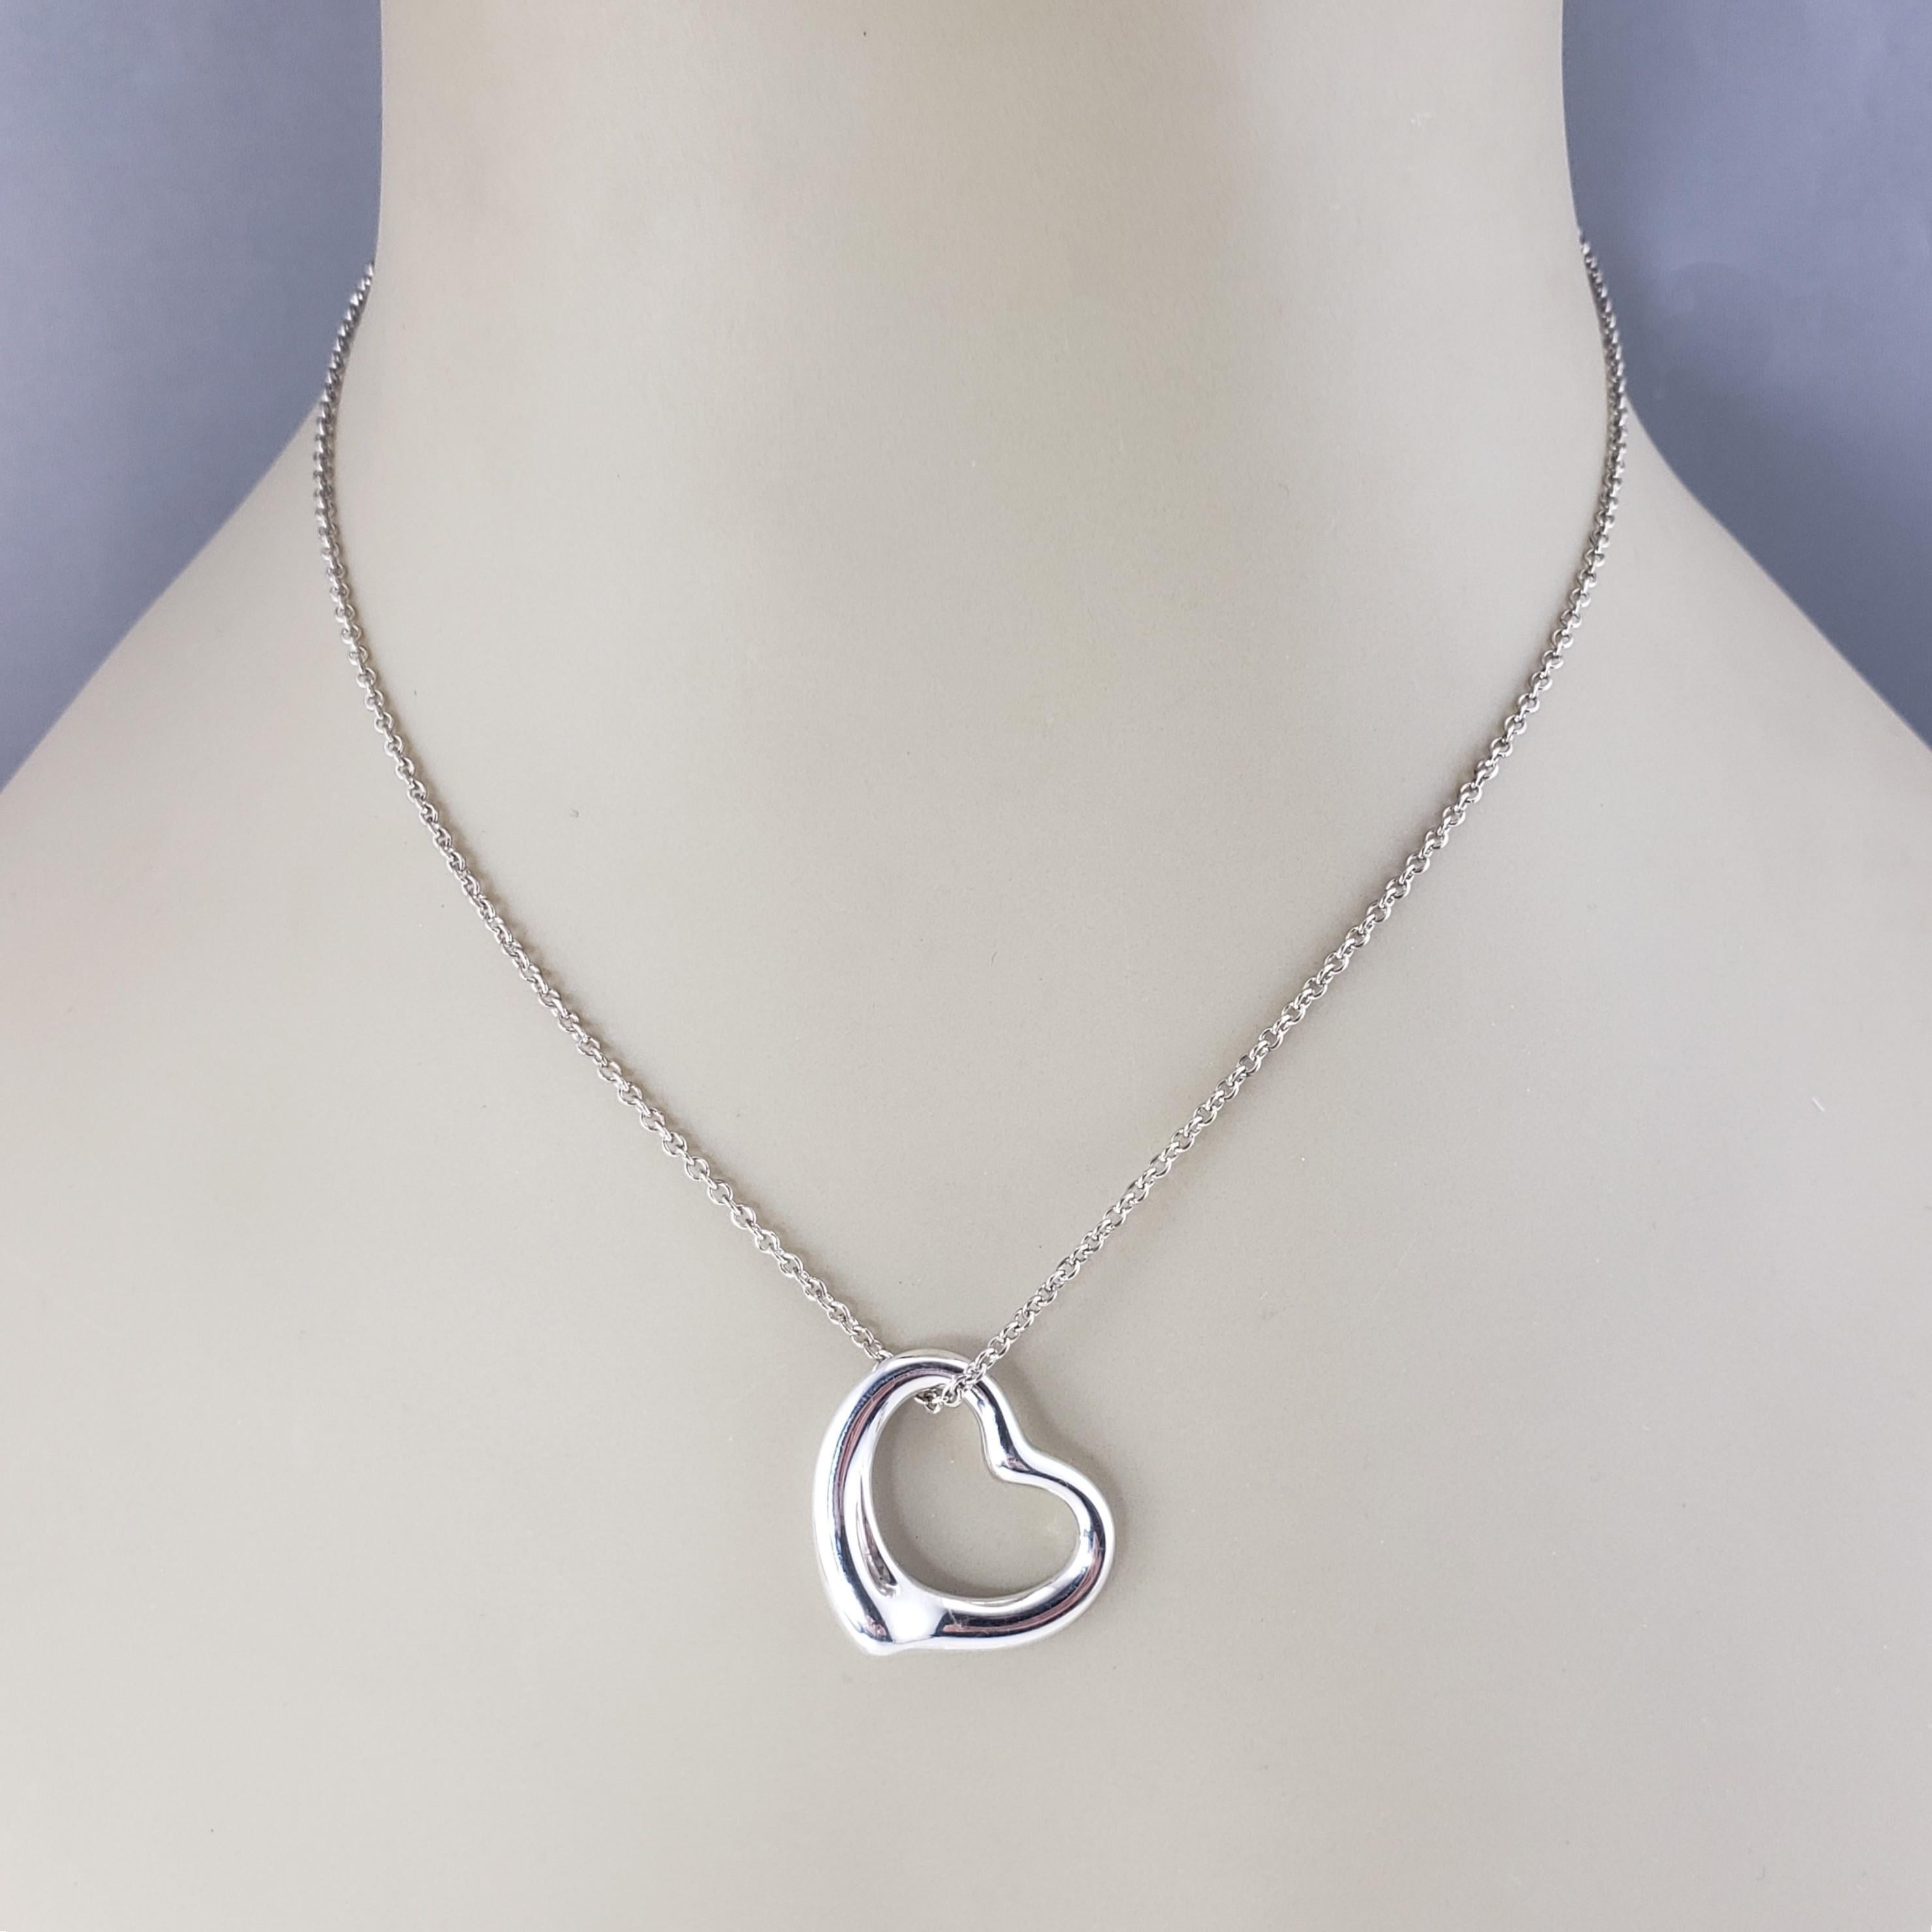 Tiffany & Co. Elsa Peretti Sterling Silver Open Heart Necklace #16845 3